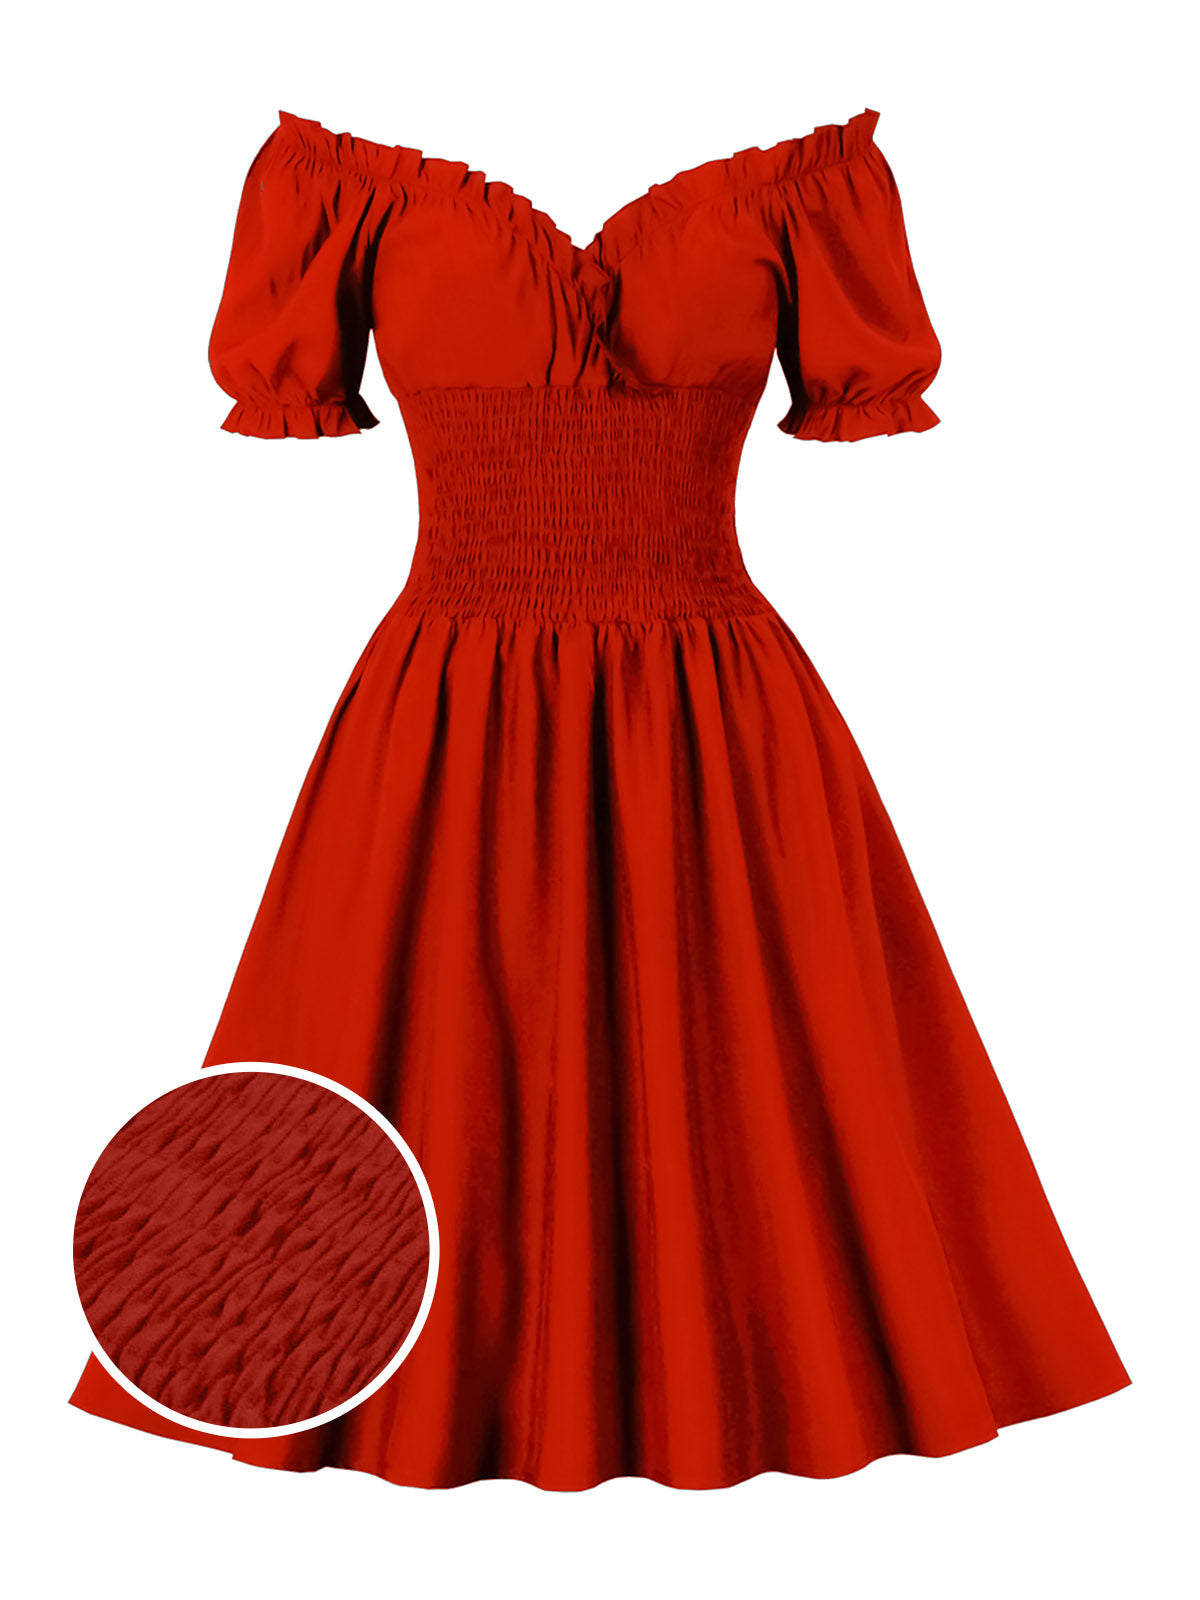 Red 1950s Christmas Plaid Girdle Dress